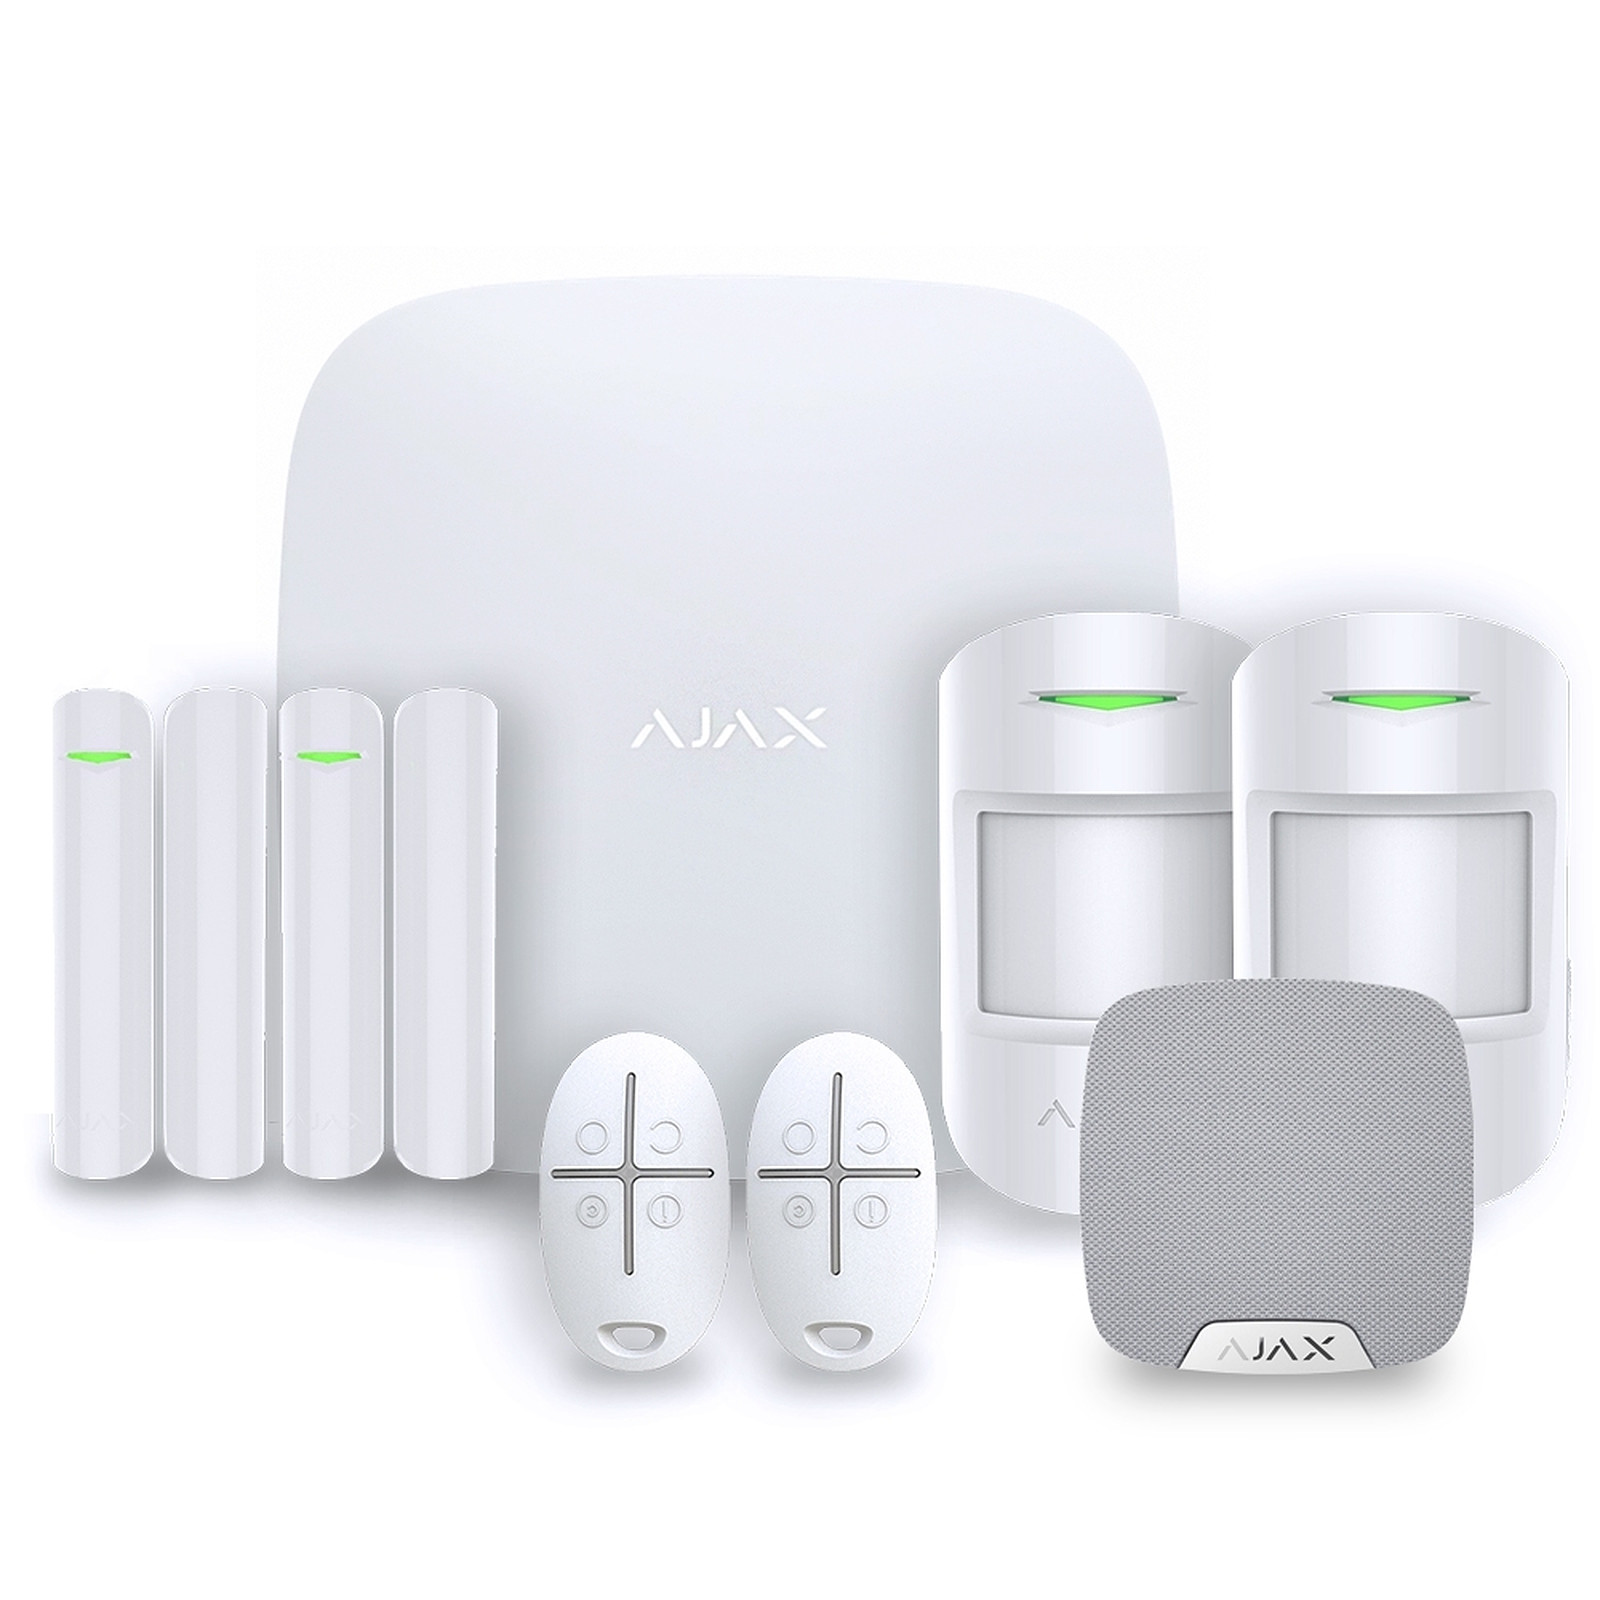 Ajax - Alarme maison StarterKit blanc - Kit 2 - Kit alarme Ajax Systems